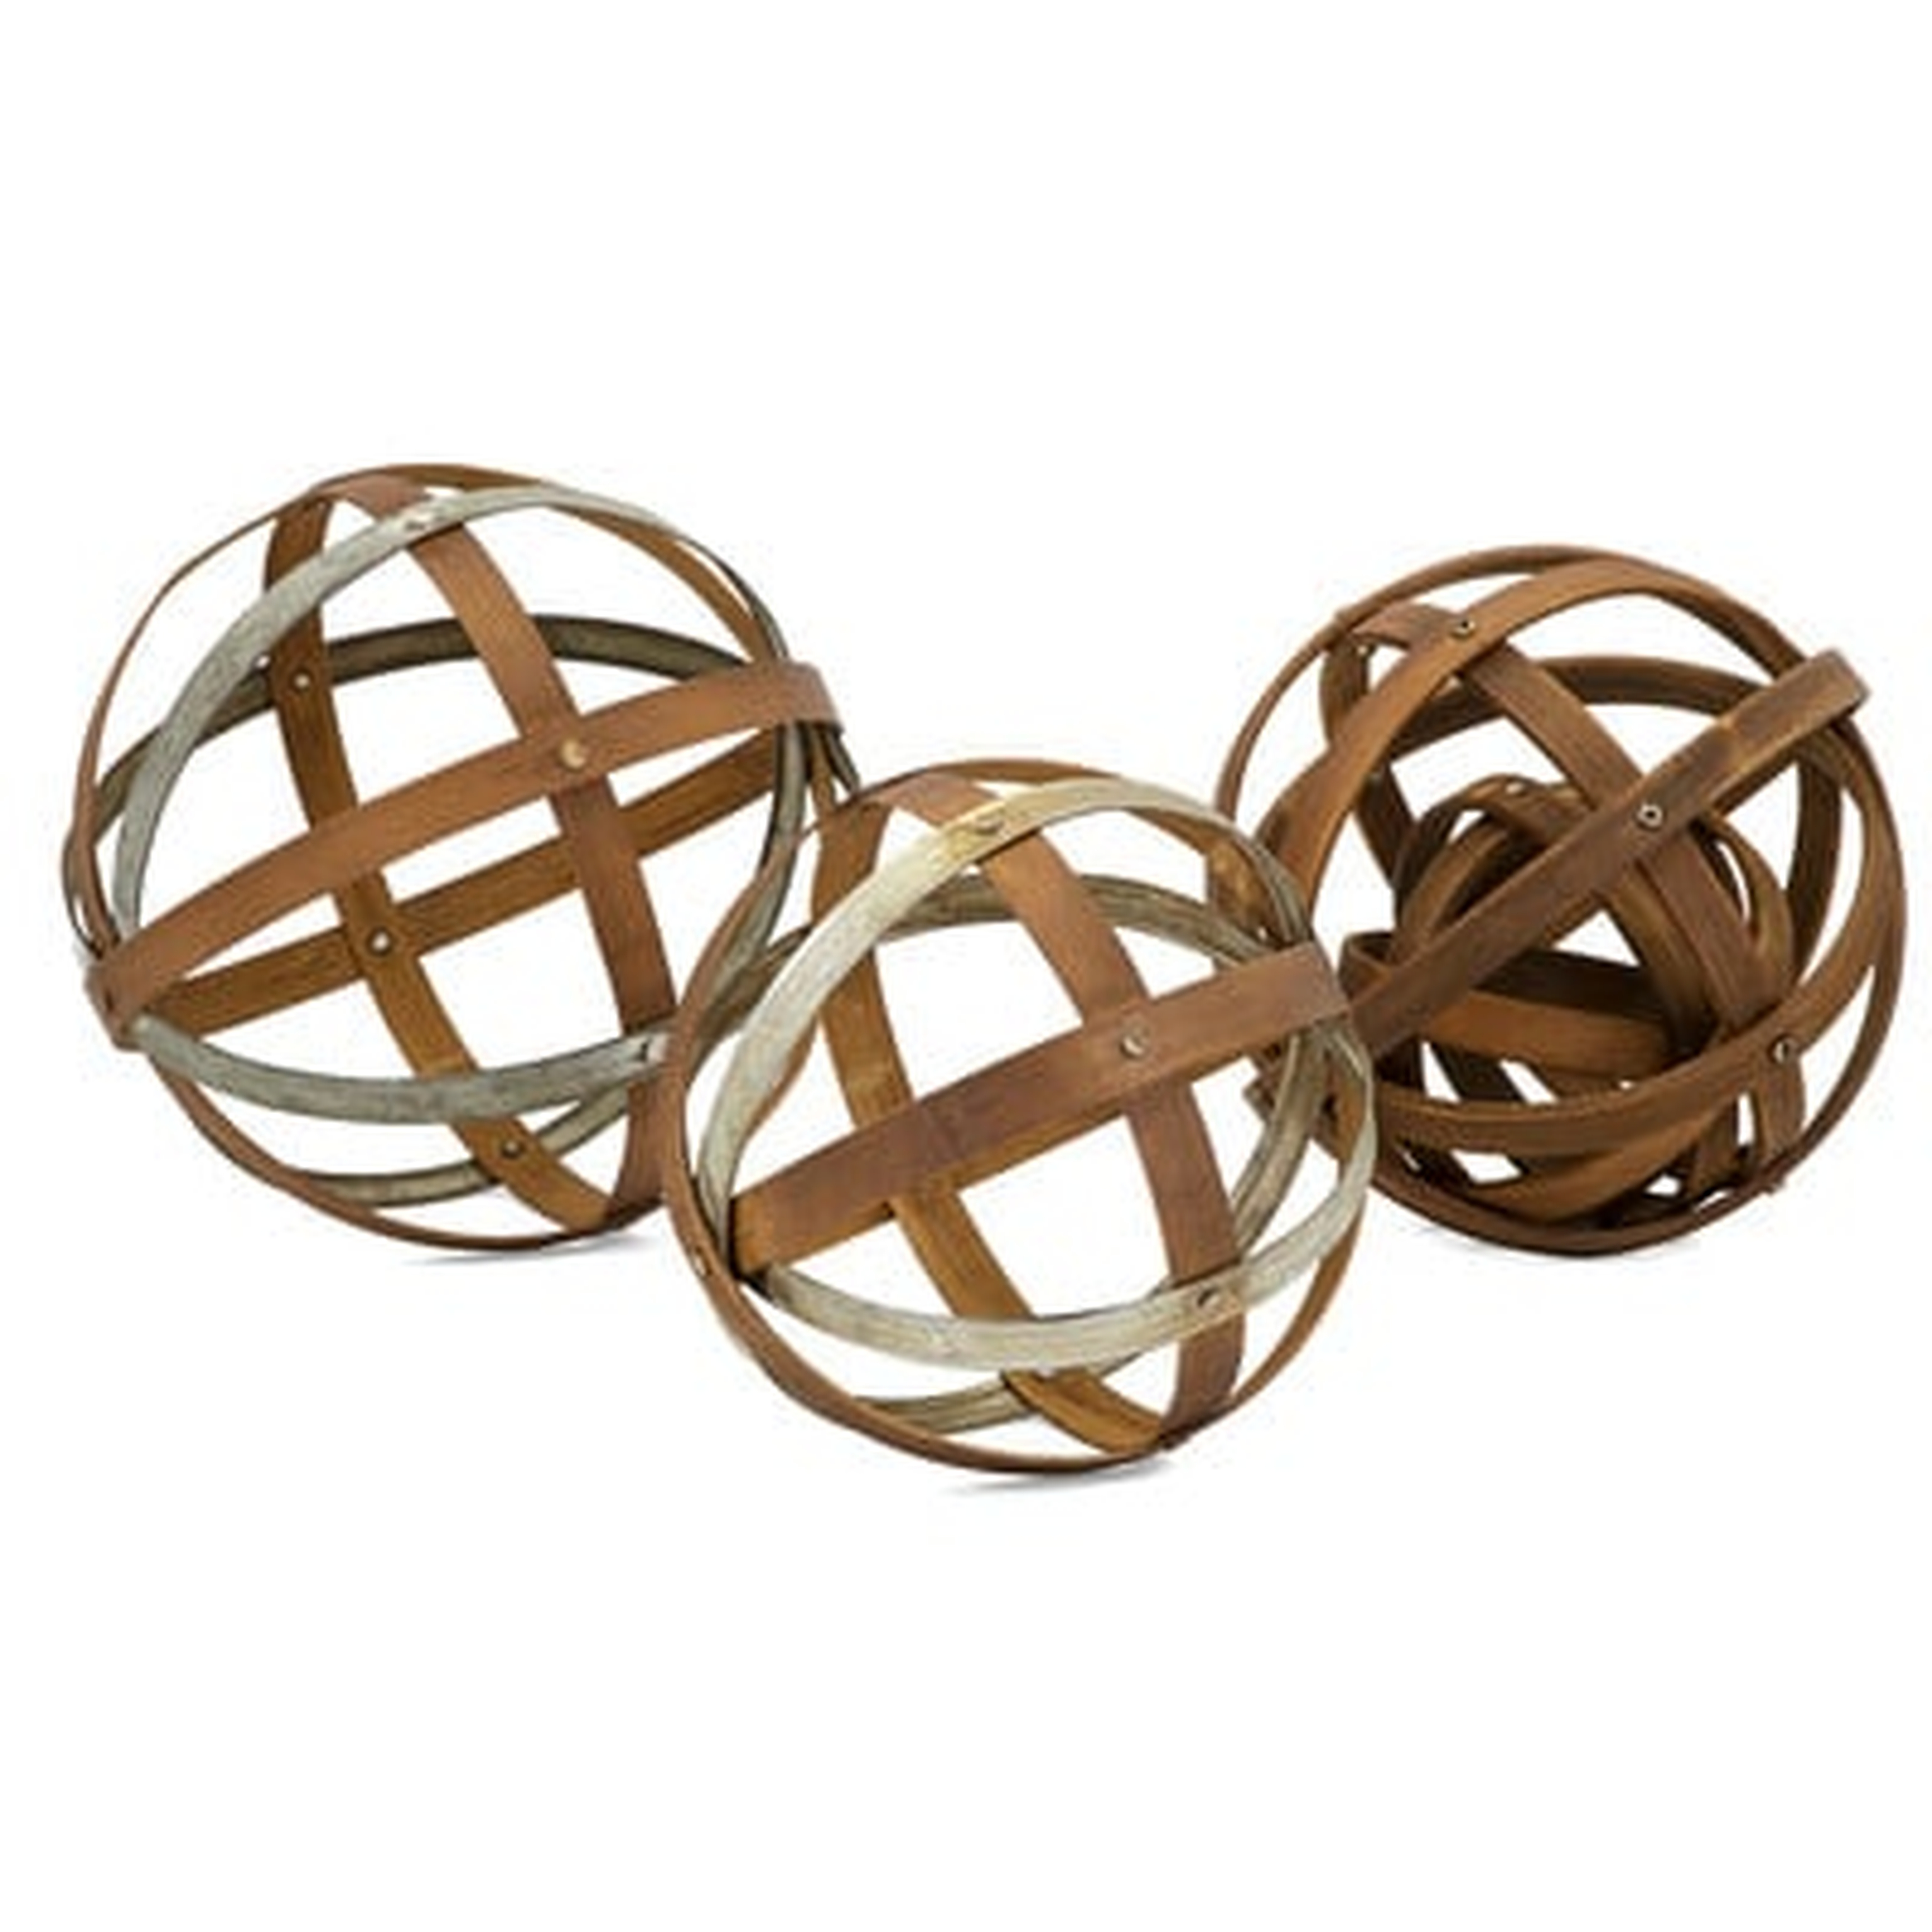 Wood and Metal Spheres 3 Piece Sculpture Set - Wayfair